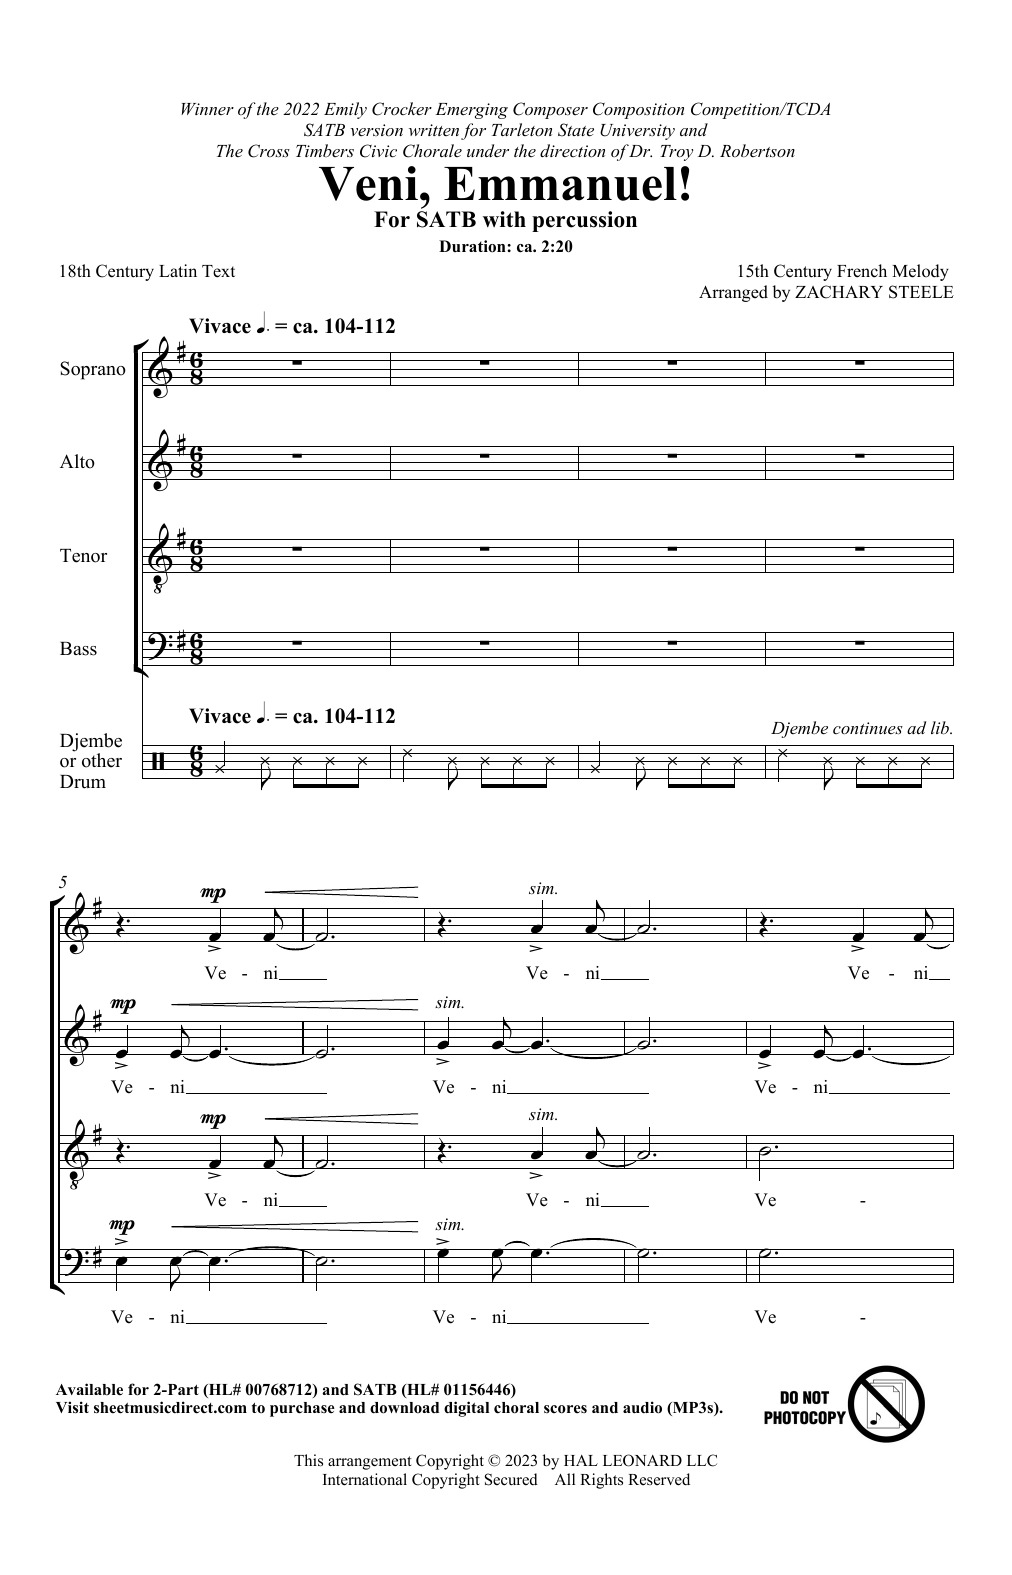 Zachary Steele Veni, Emmanuel Sheet Music Notes & Chords for SATB Choir - Download or Print PDF